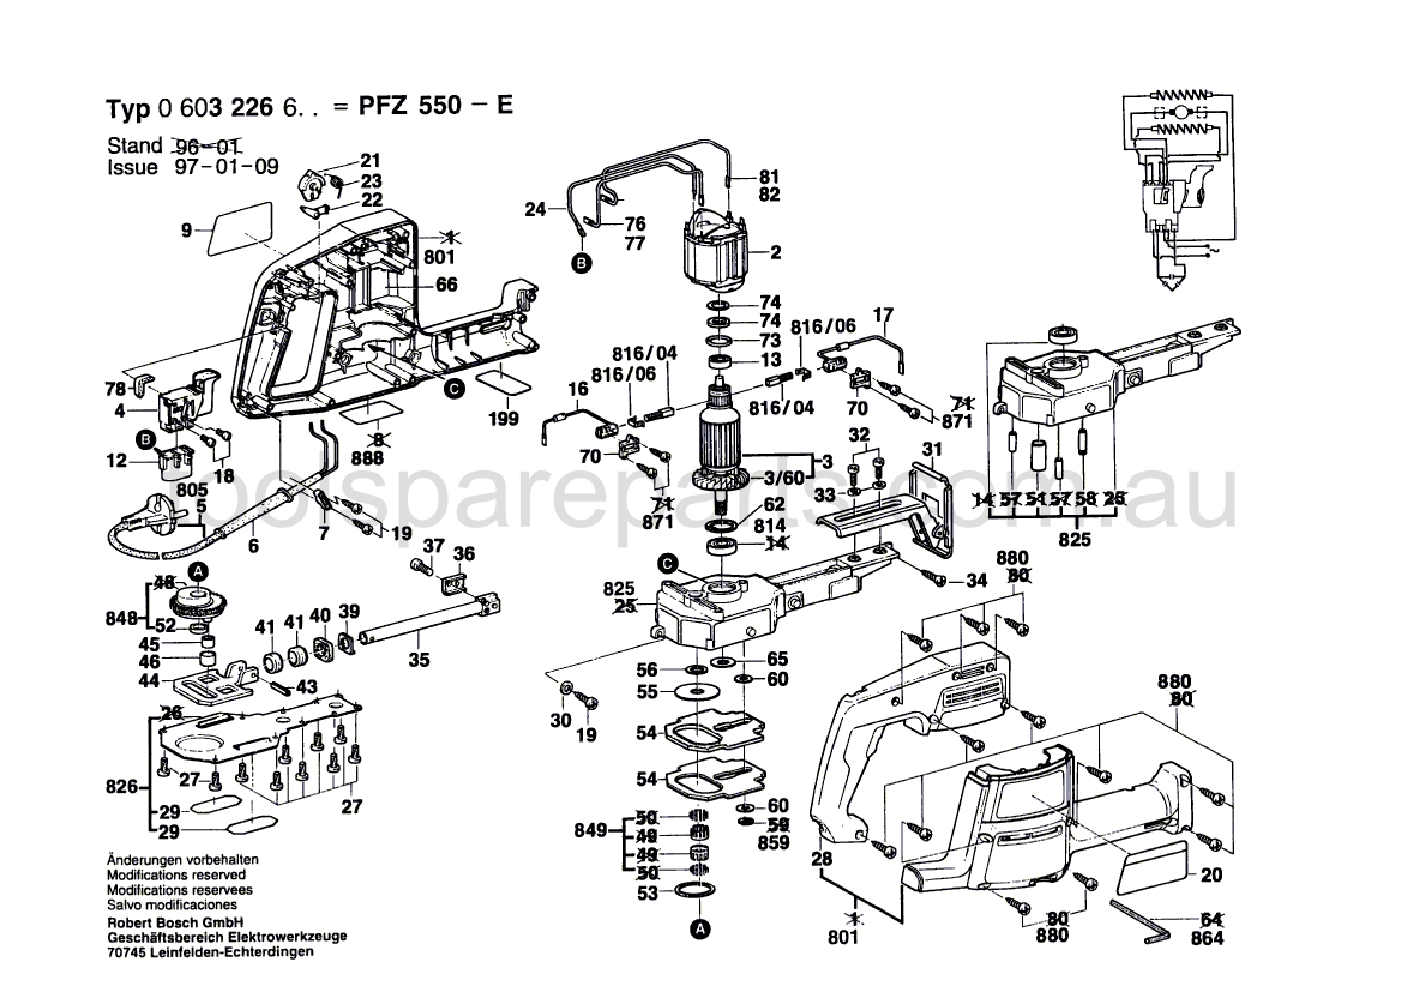 Bosch PFZ 550 E 0603226637  Diagram 1